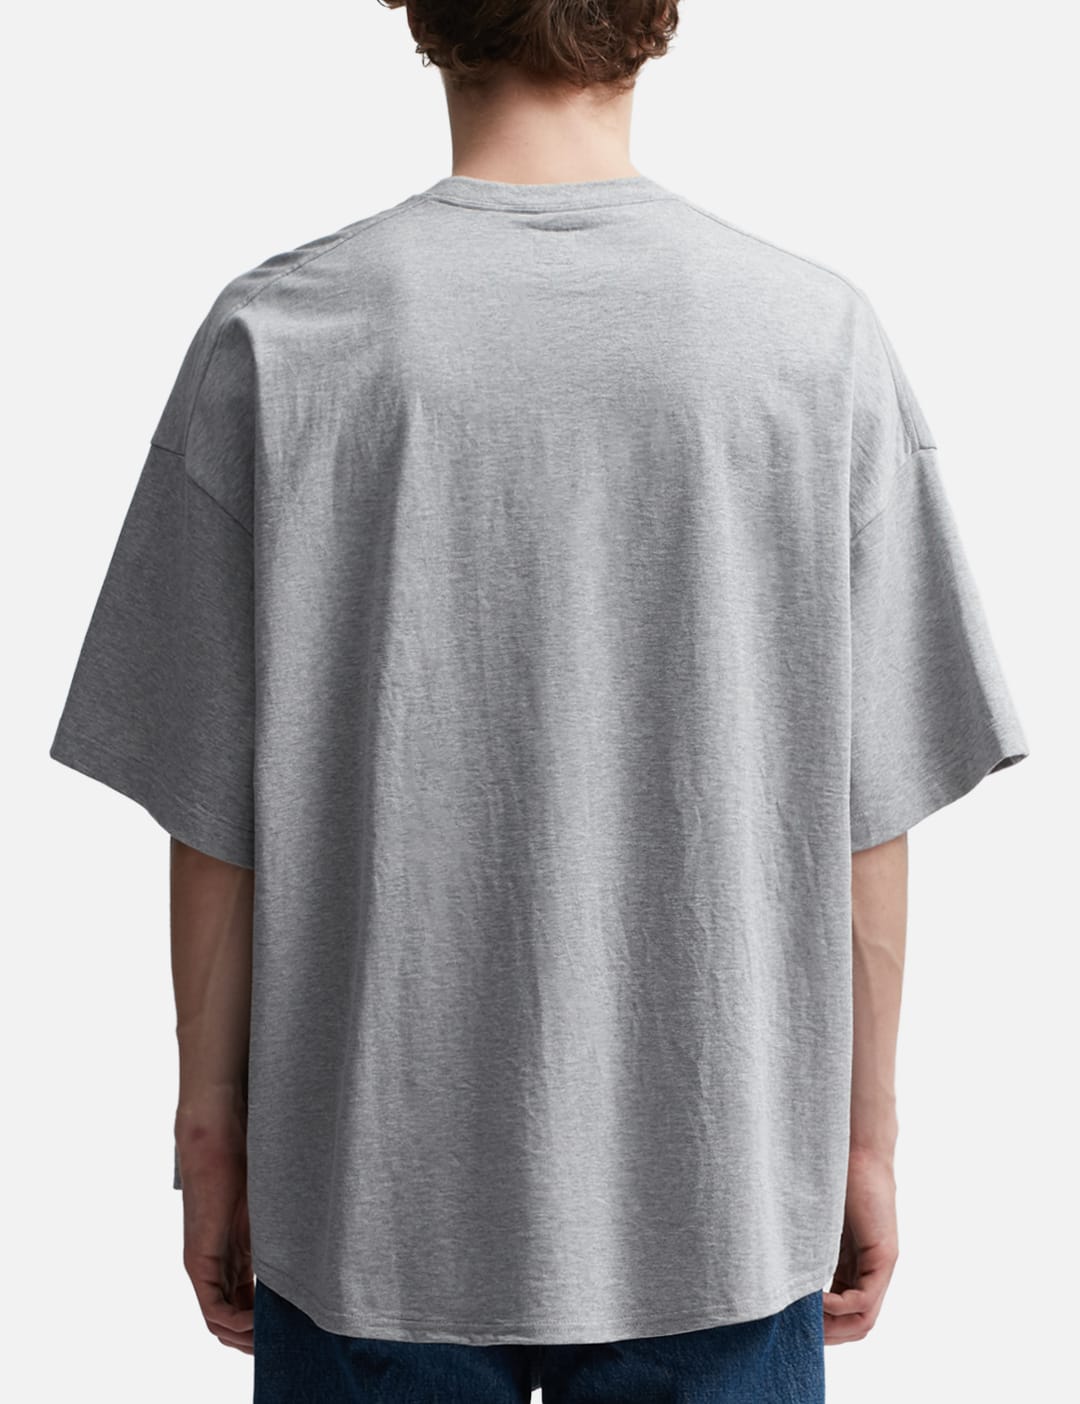 SEE SEE - Super Big Short Sleeve T-shirt | HBX - HYPEBEAST 為您